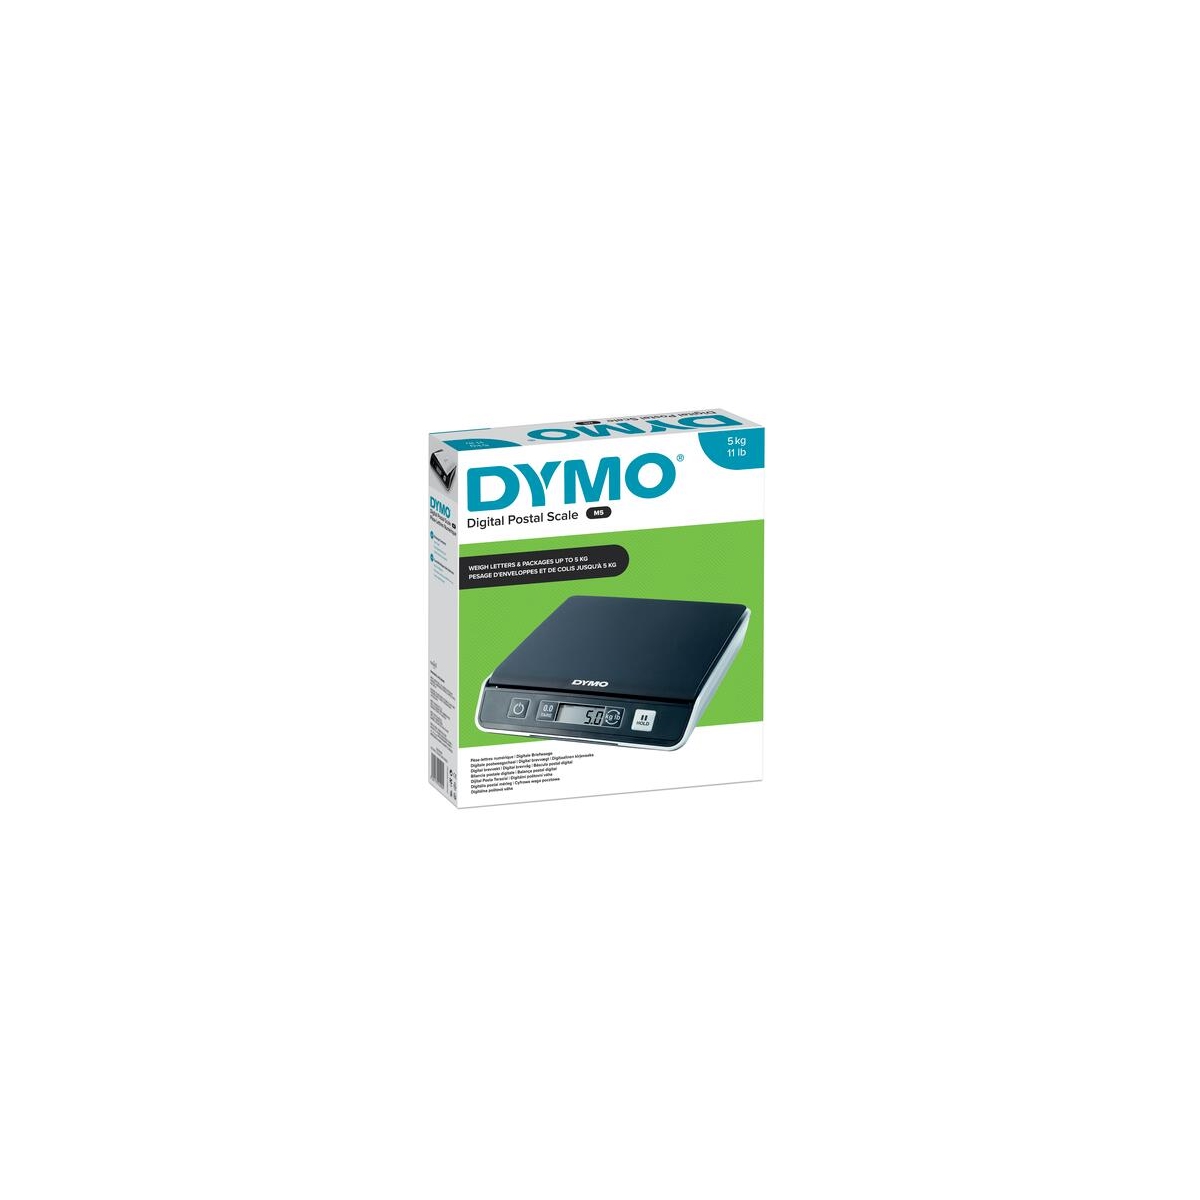 DYMO M5 Digital Postal Scale, 5-Pound Capacity